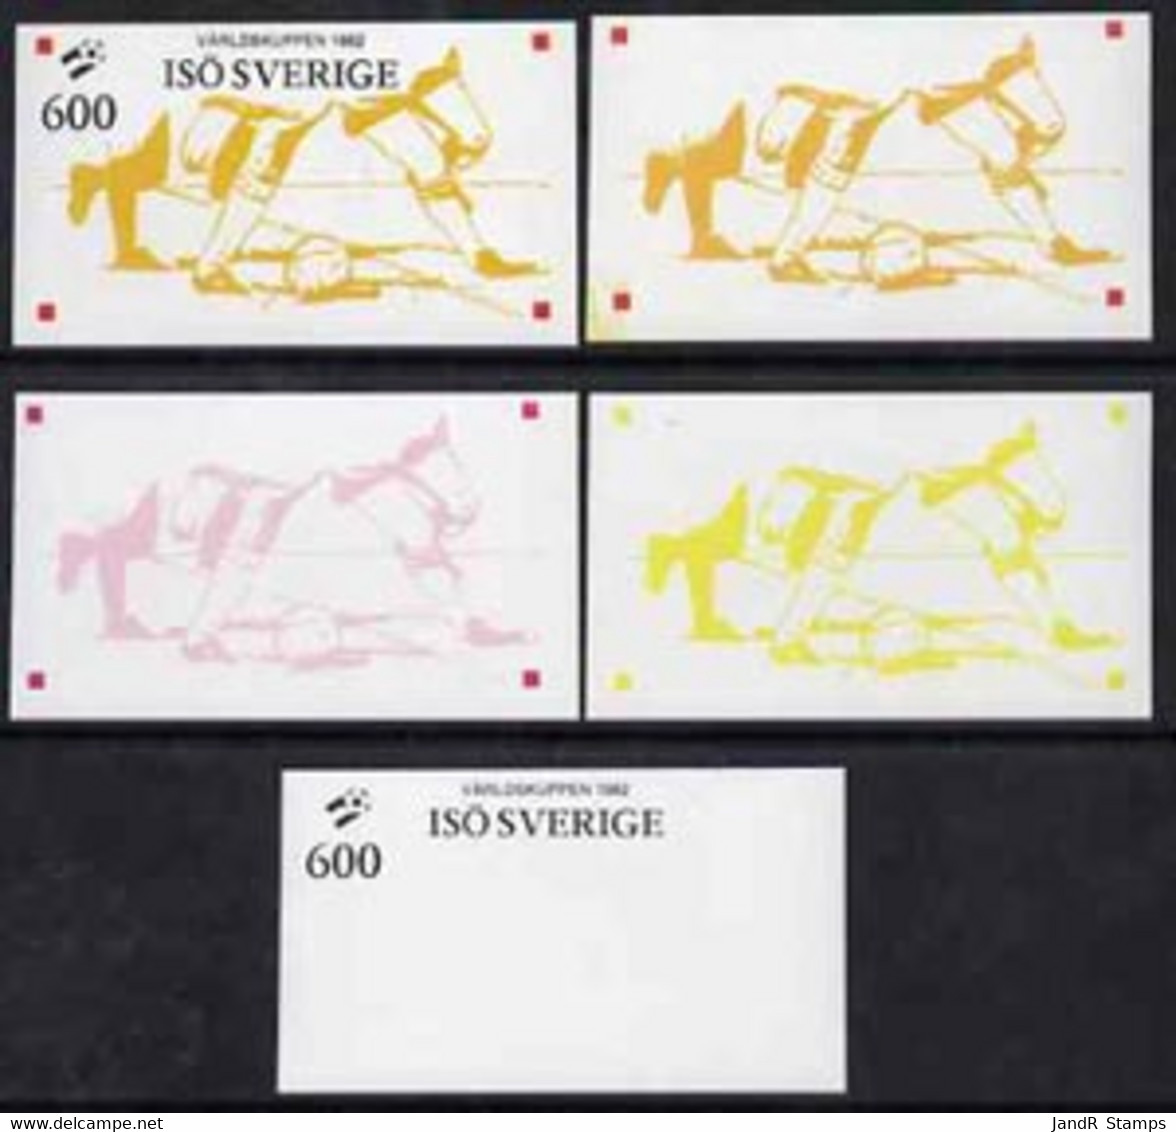 Iso - Sweden 1982 Football World Cup Imperf Souvenir Sheet (600 Value) Set Of 5 Progressive Colour Proofs Comprising The - Ortsausgaben